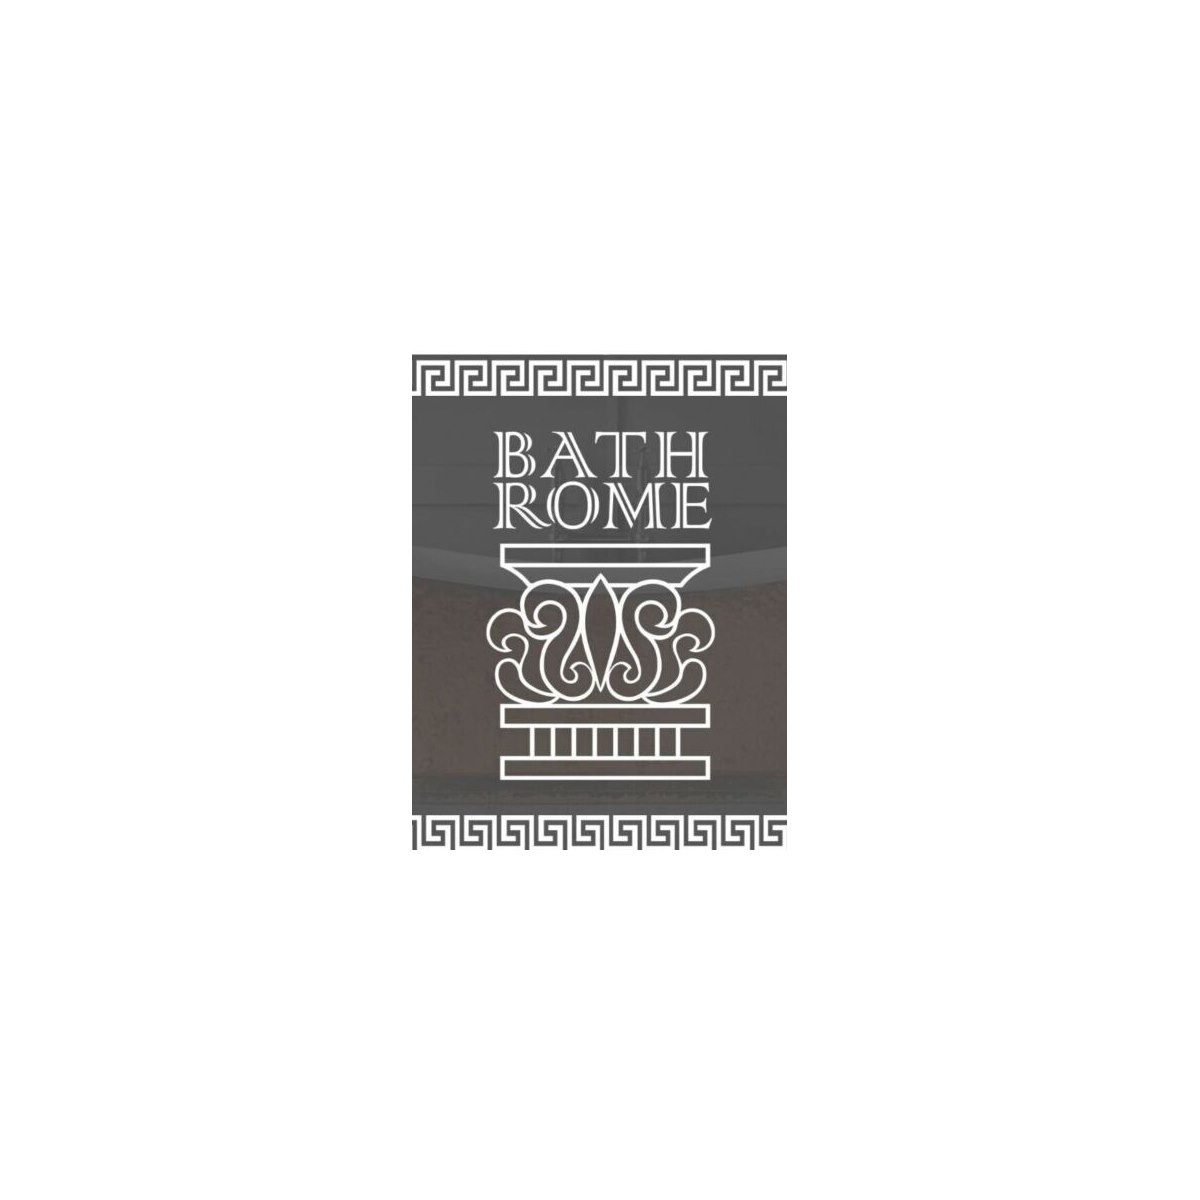 Where to Buy Bath Rome Cast Iron Bath Cleaner